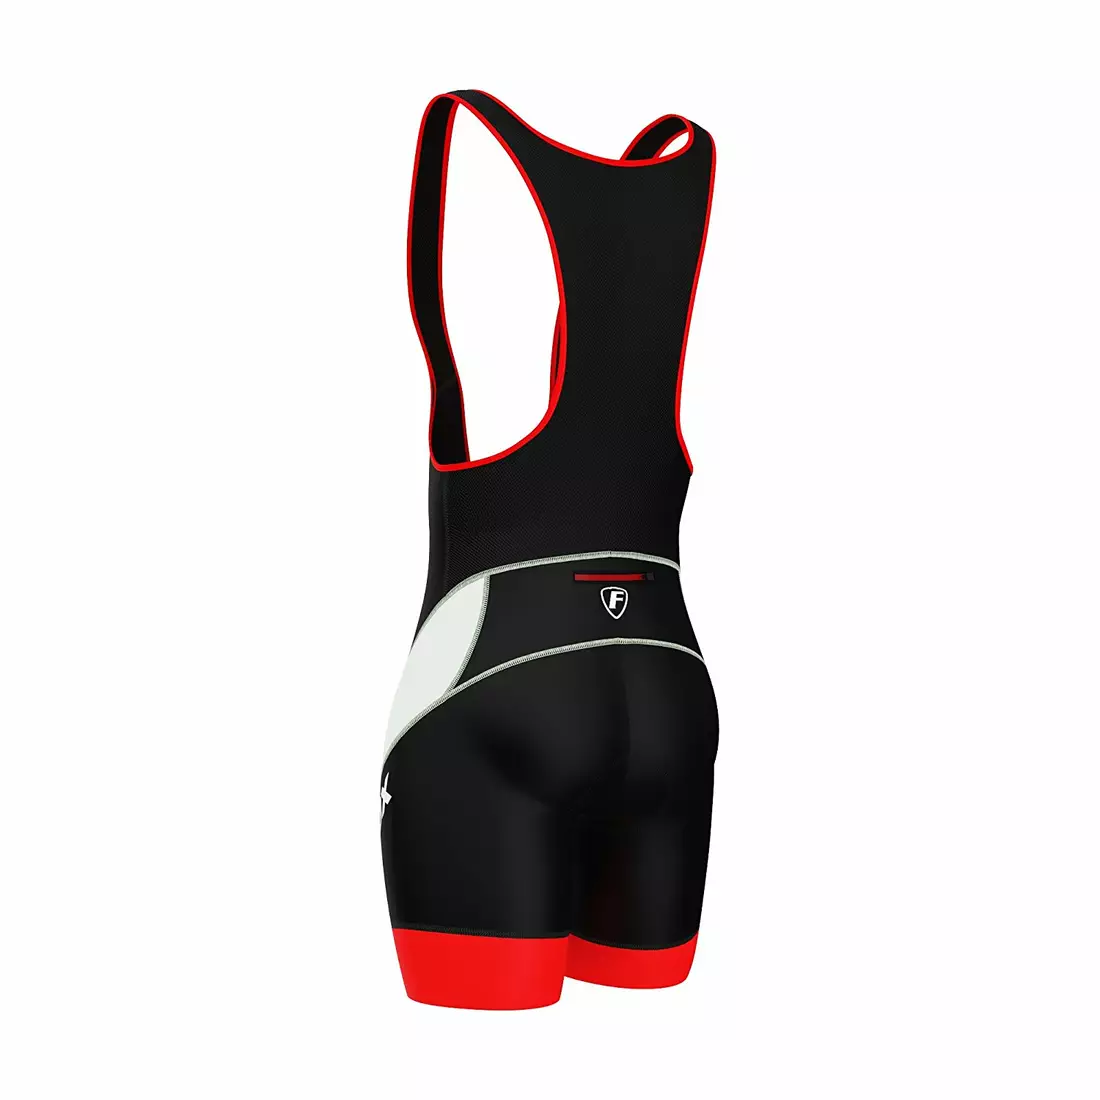 FDX 950 men's bib shorts, black and red